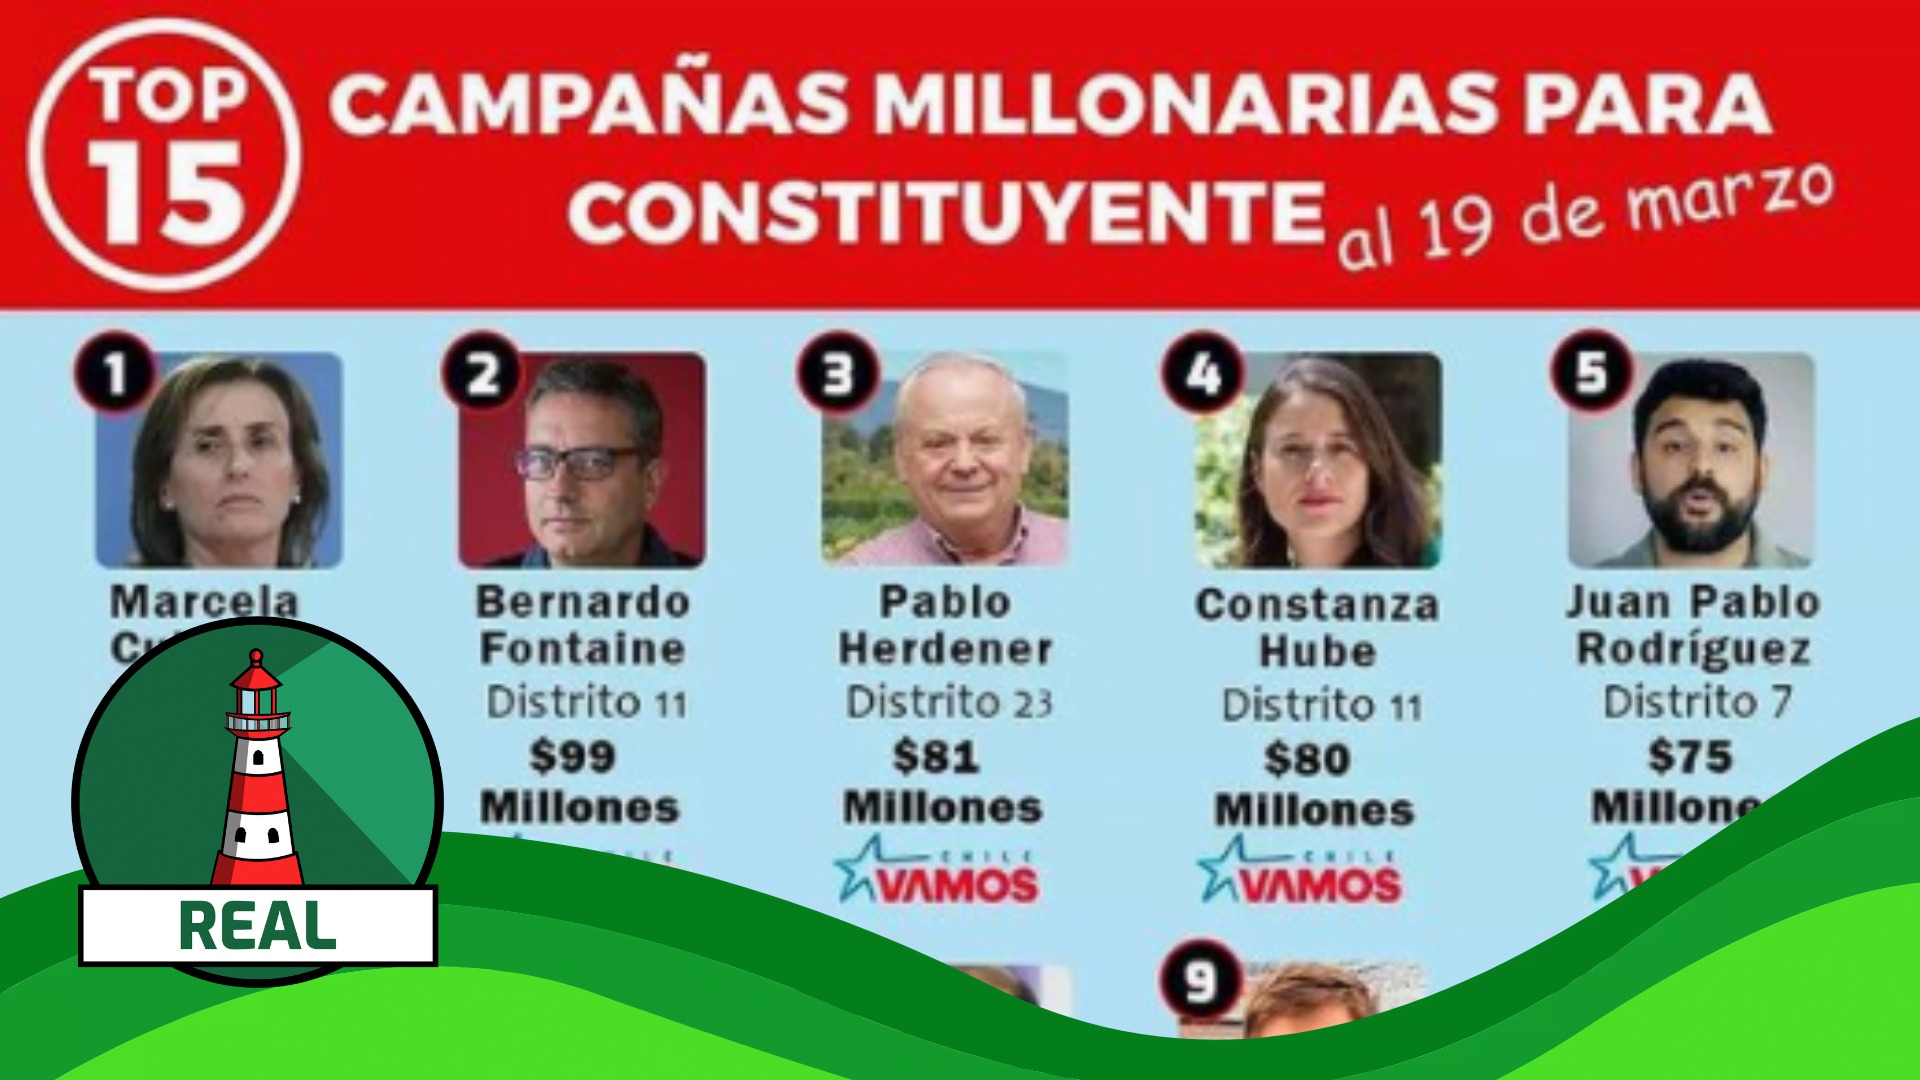 You are currently viewing (Imagen) 15 candidatos constituyentes tienen campañas millonarias: #Real